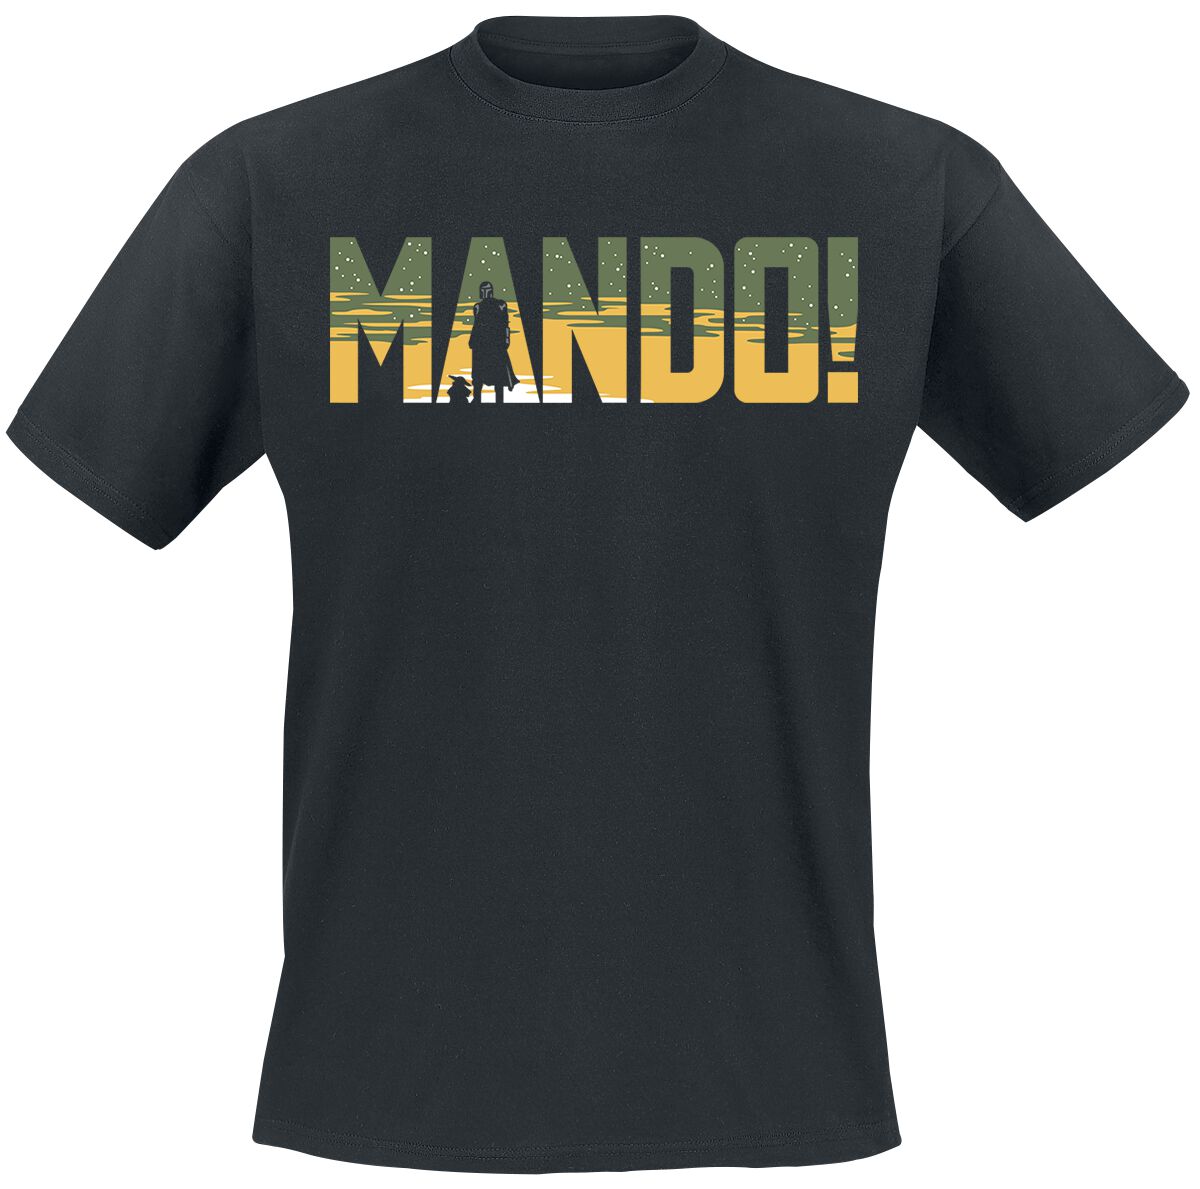 Star Wars The Mandalorian - Season 3 - Mando T-Shirt schwarz in S